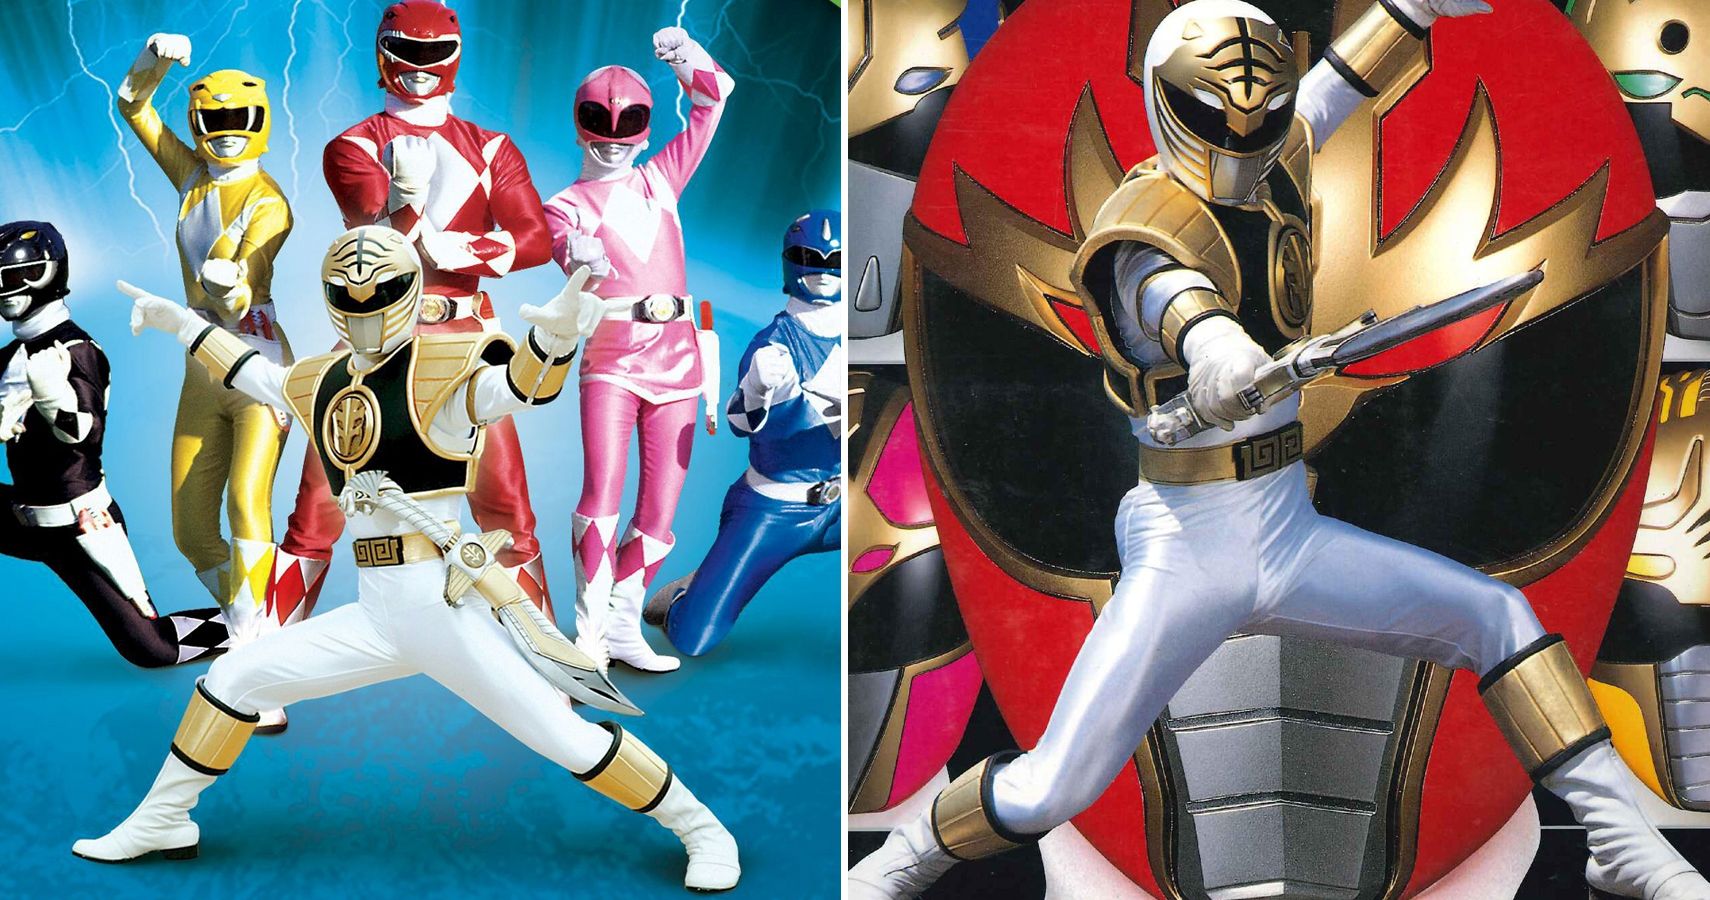 Power rangers anime or super sentai anime called ranger reject or sent, Powers Rangers